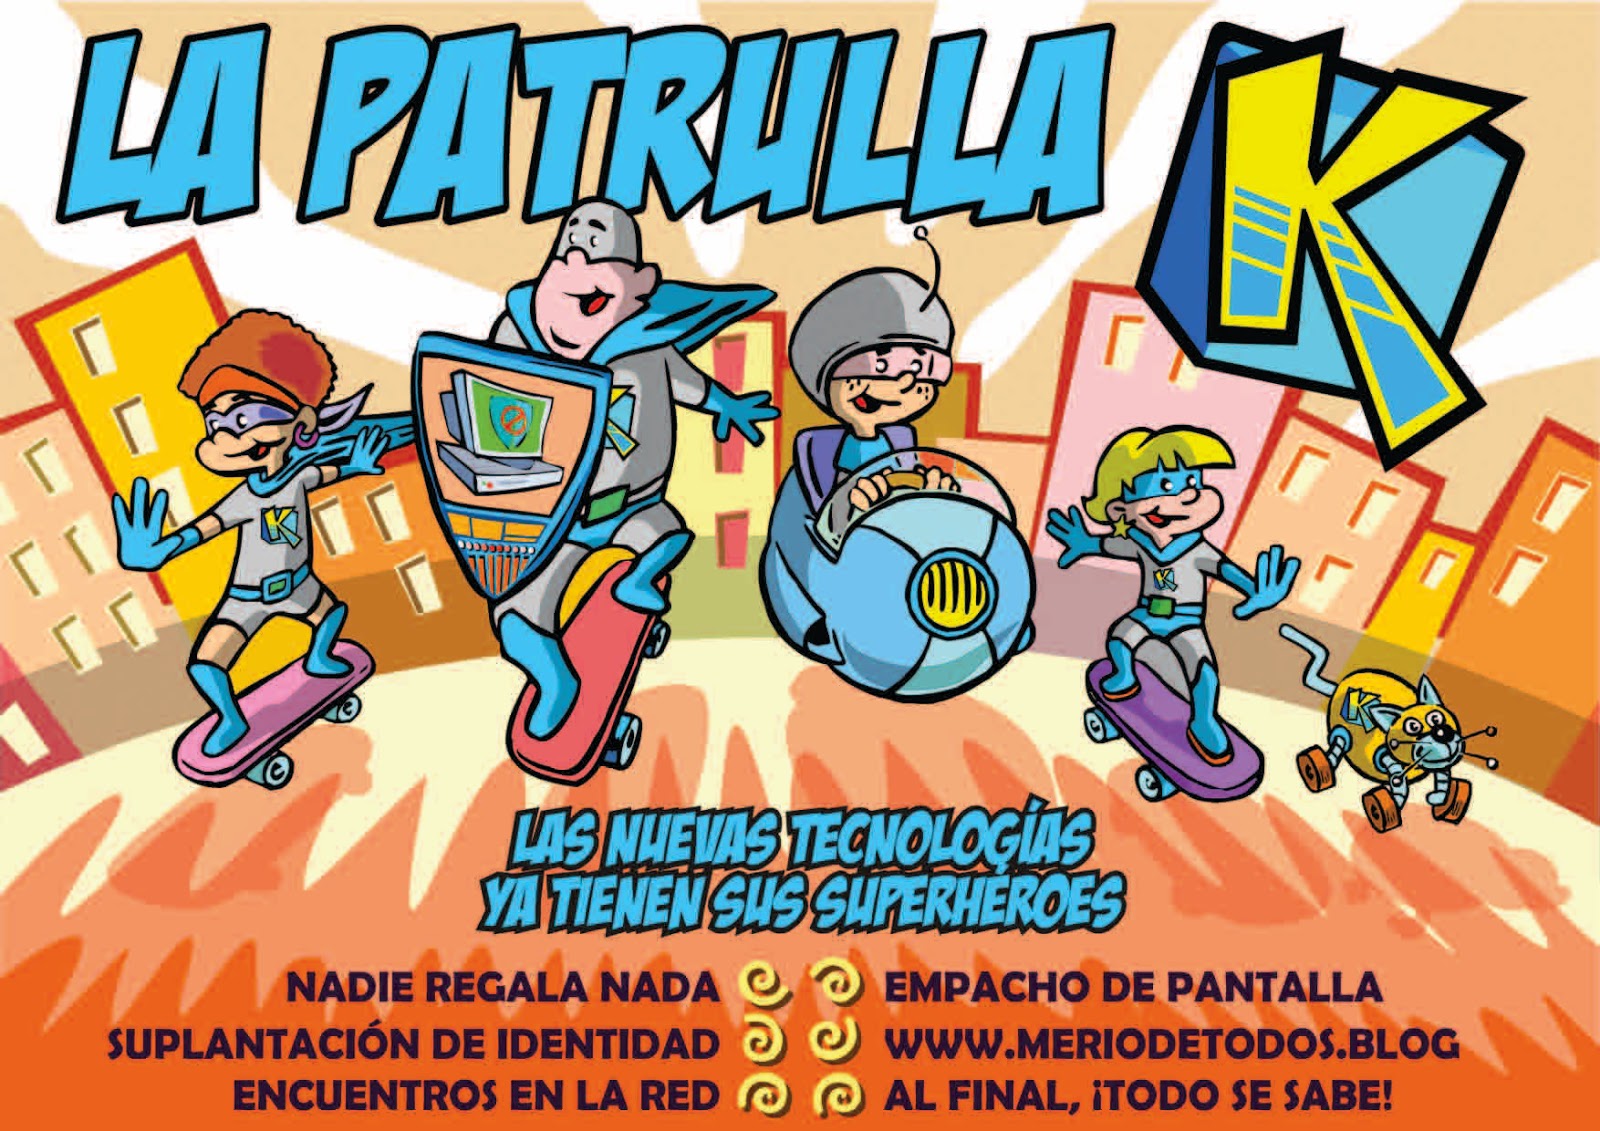 http://www.kiddia.org/patrulla-k-comic